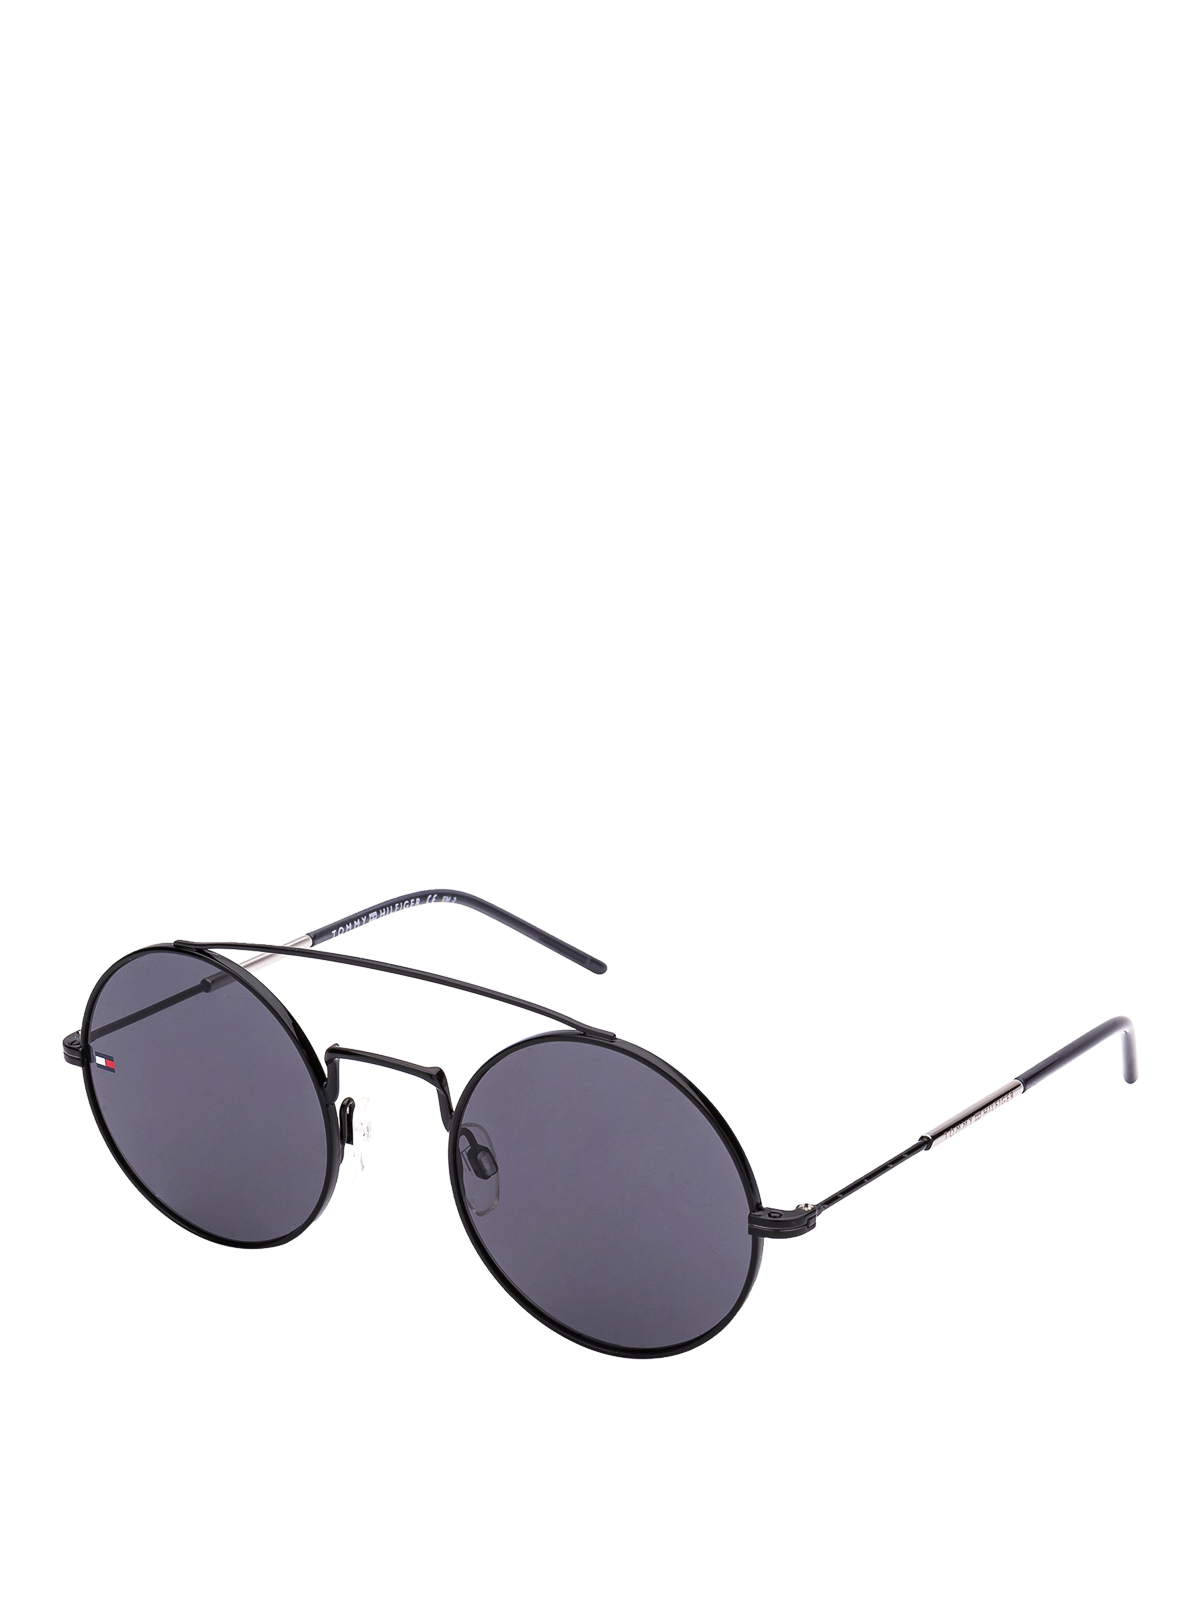 Sunglasses Tommy Hilfiger - Black - TH1600S807IR